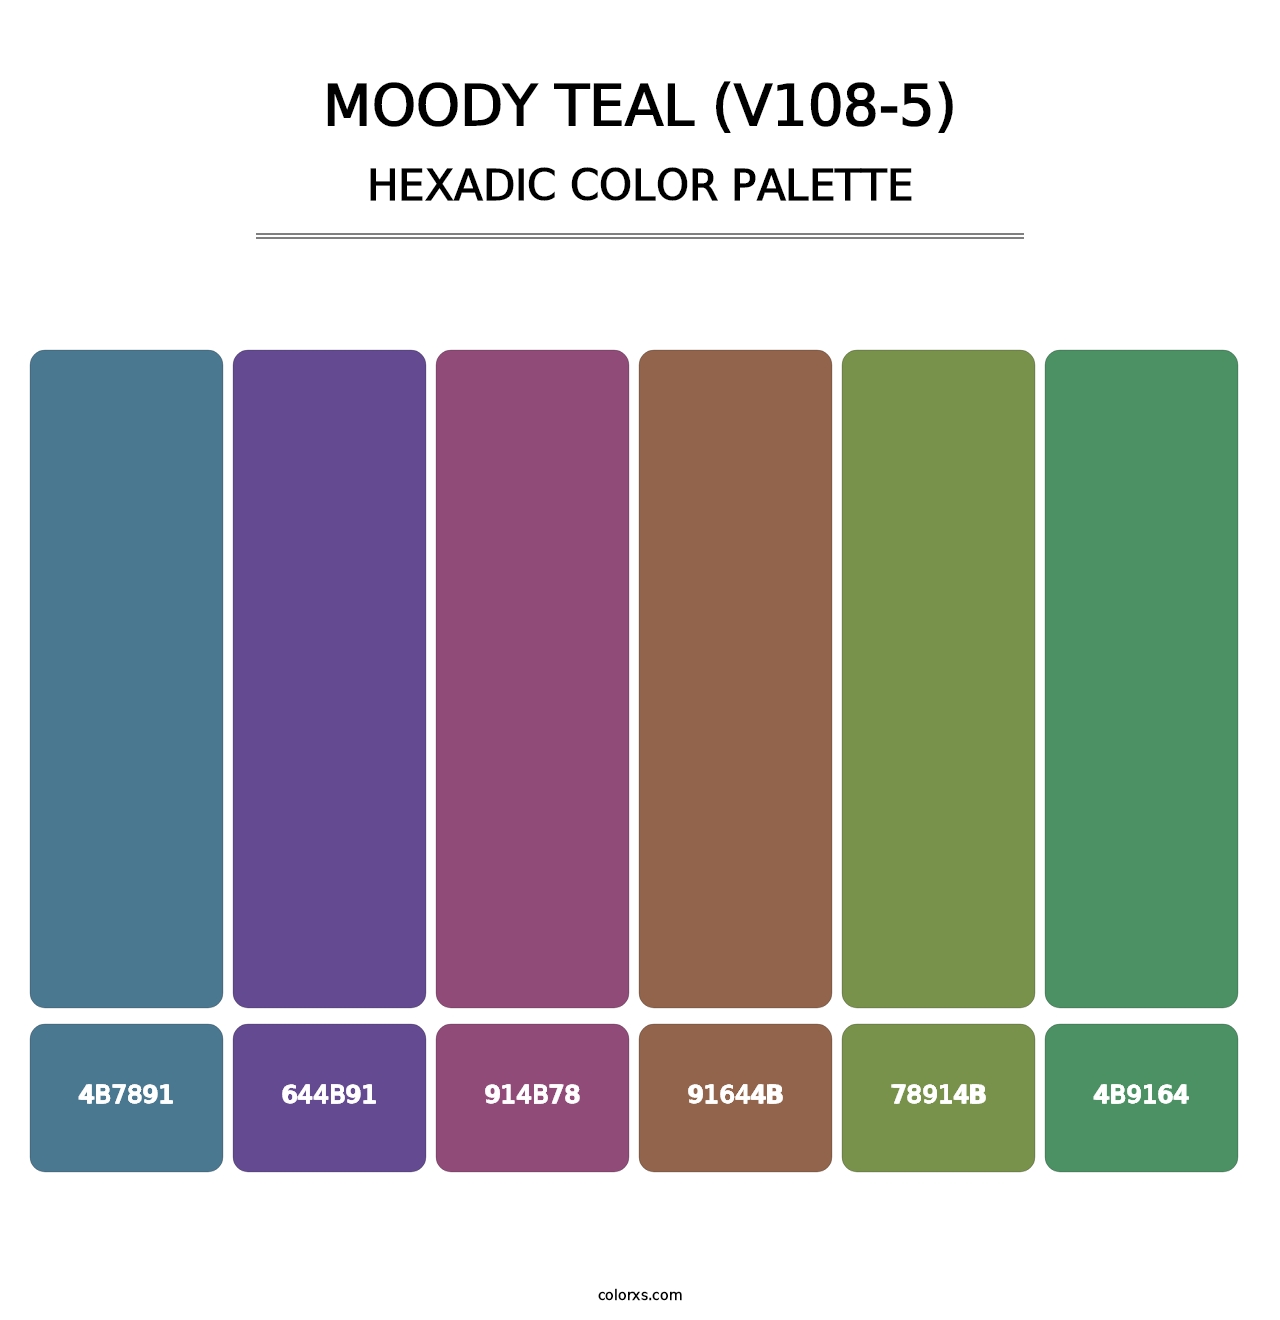 Moody Teal (V108-5) - Hexadic Color Palette